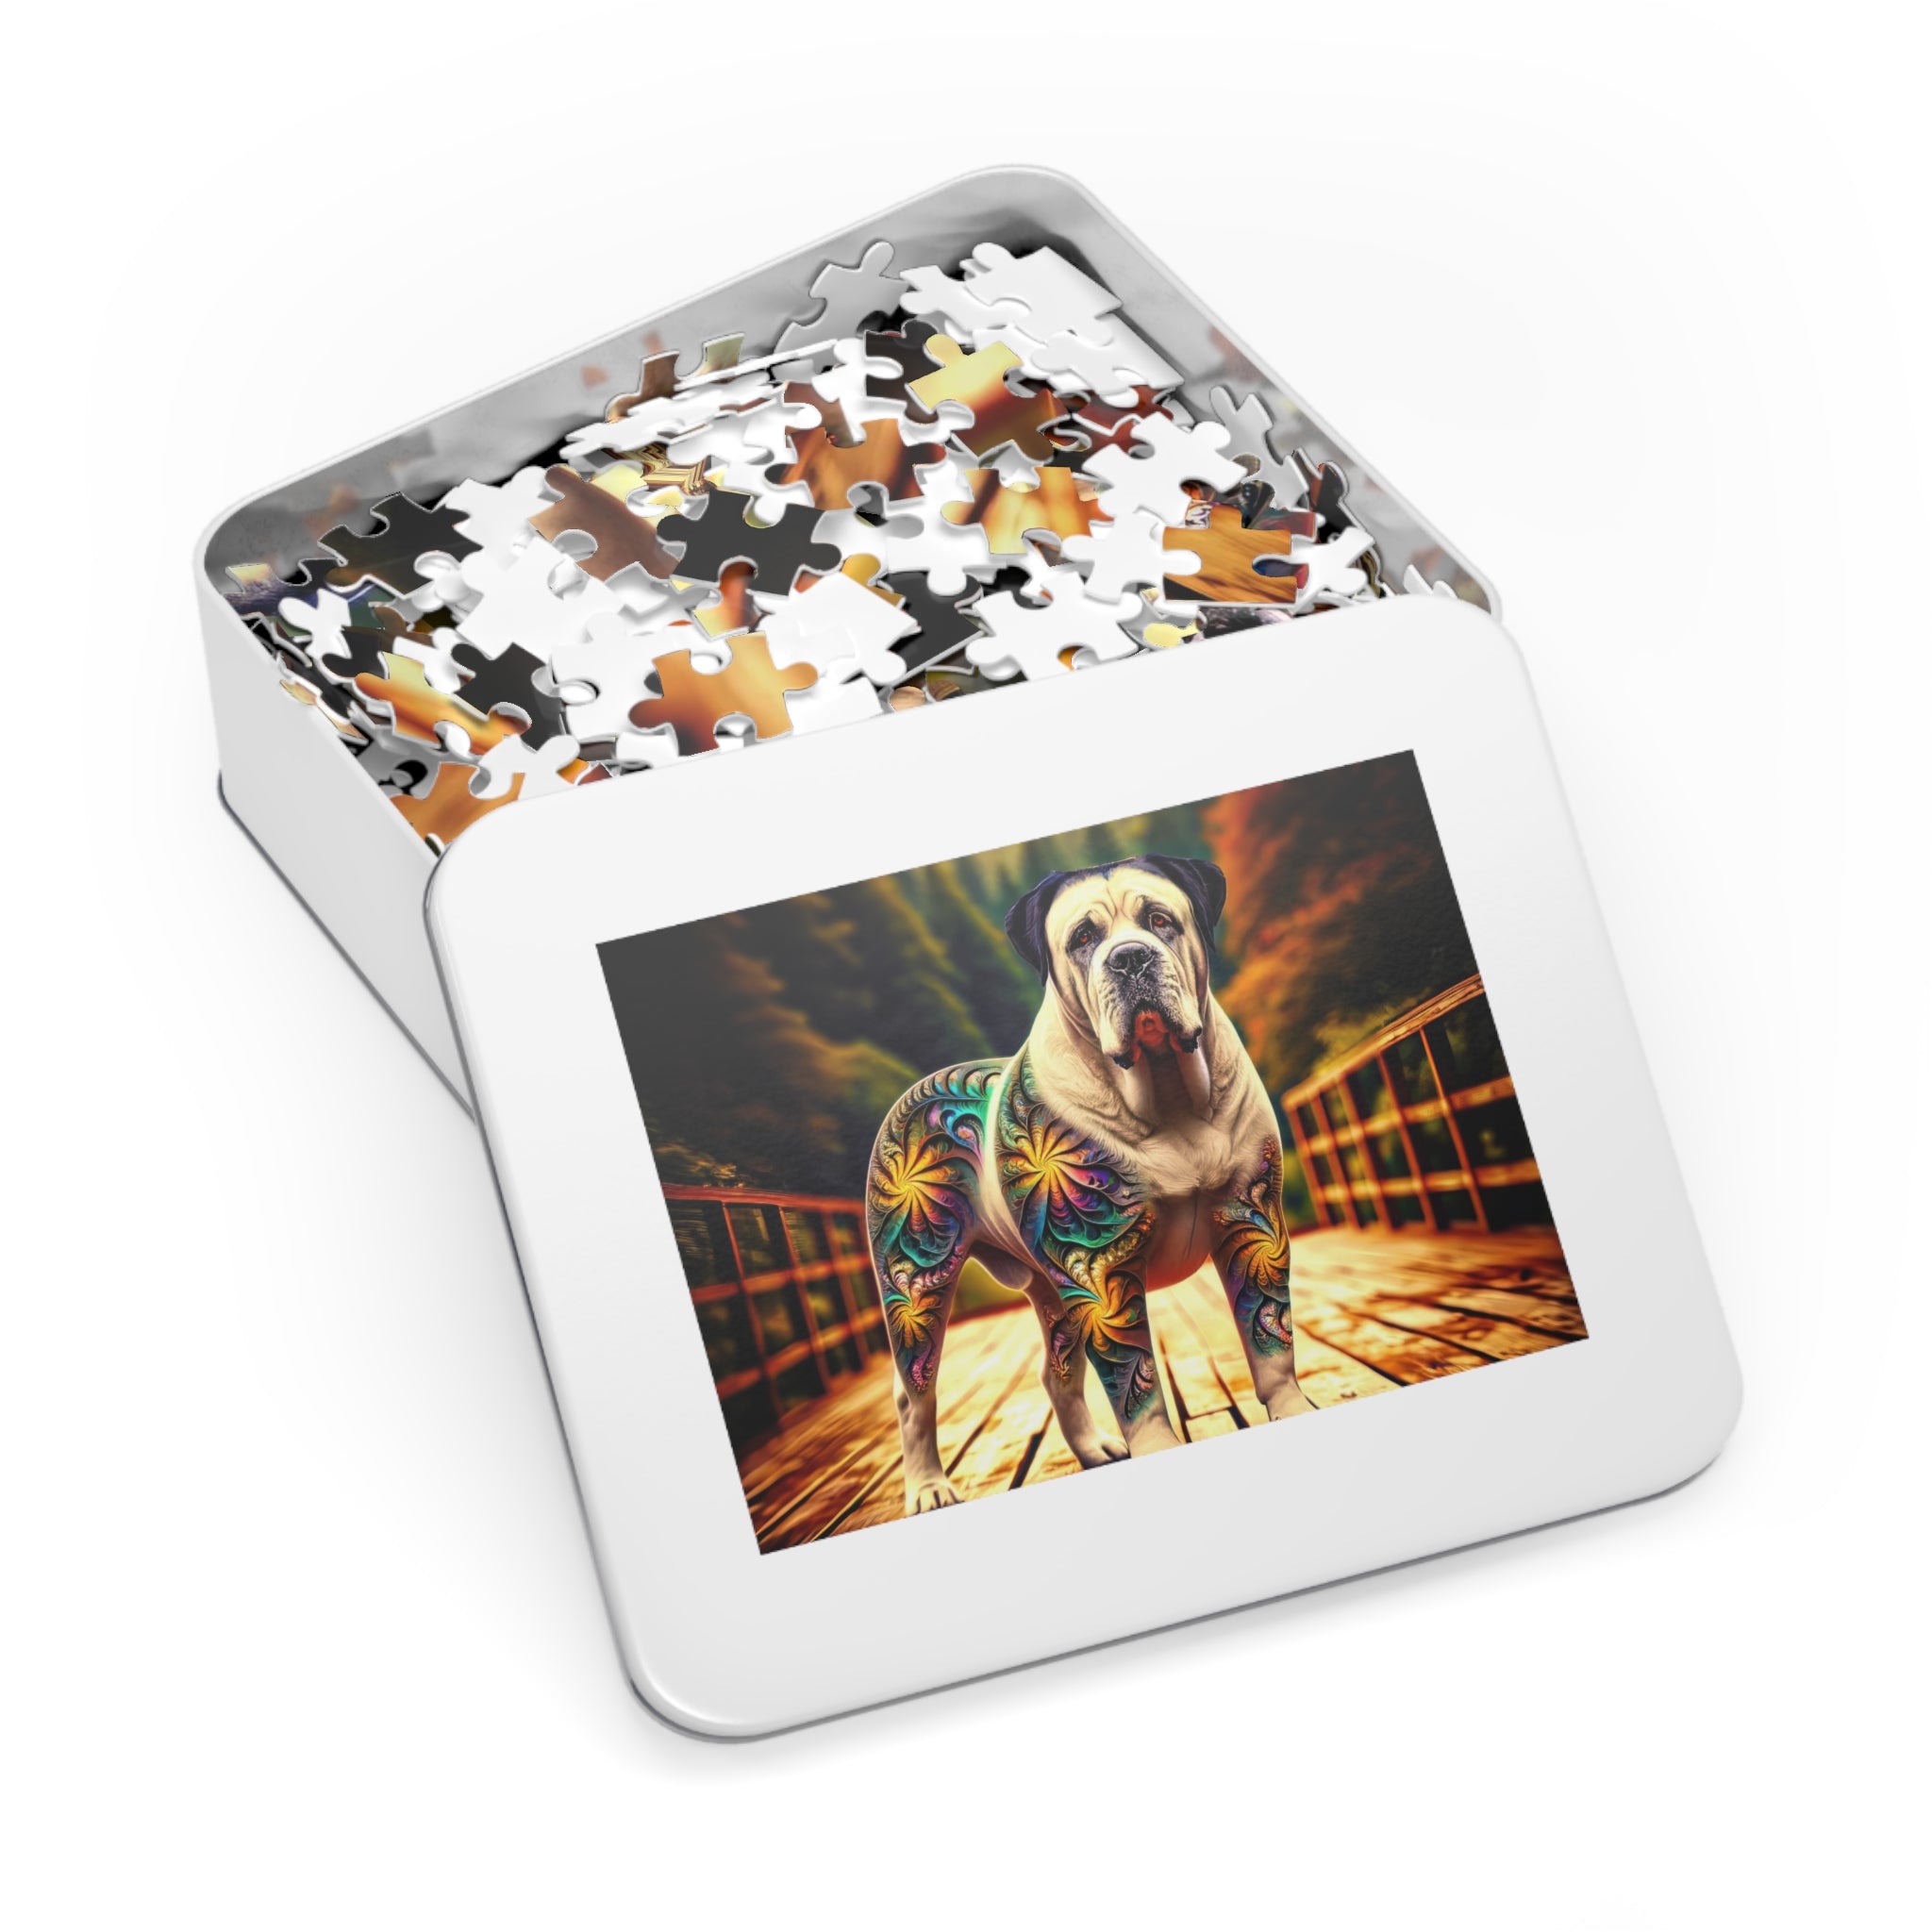 Mystic Mastiff Jigsaw Puzzle